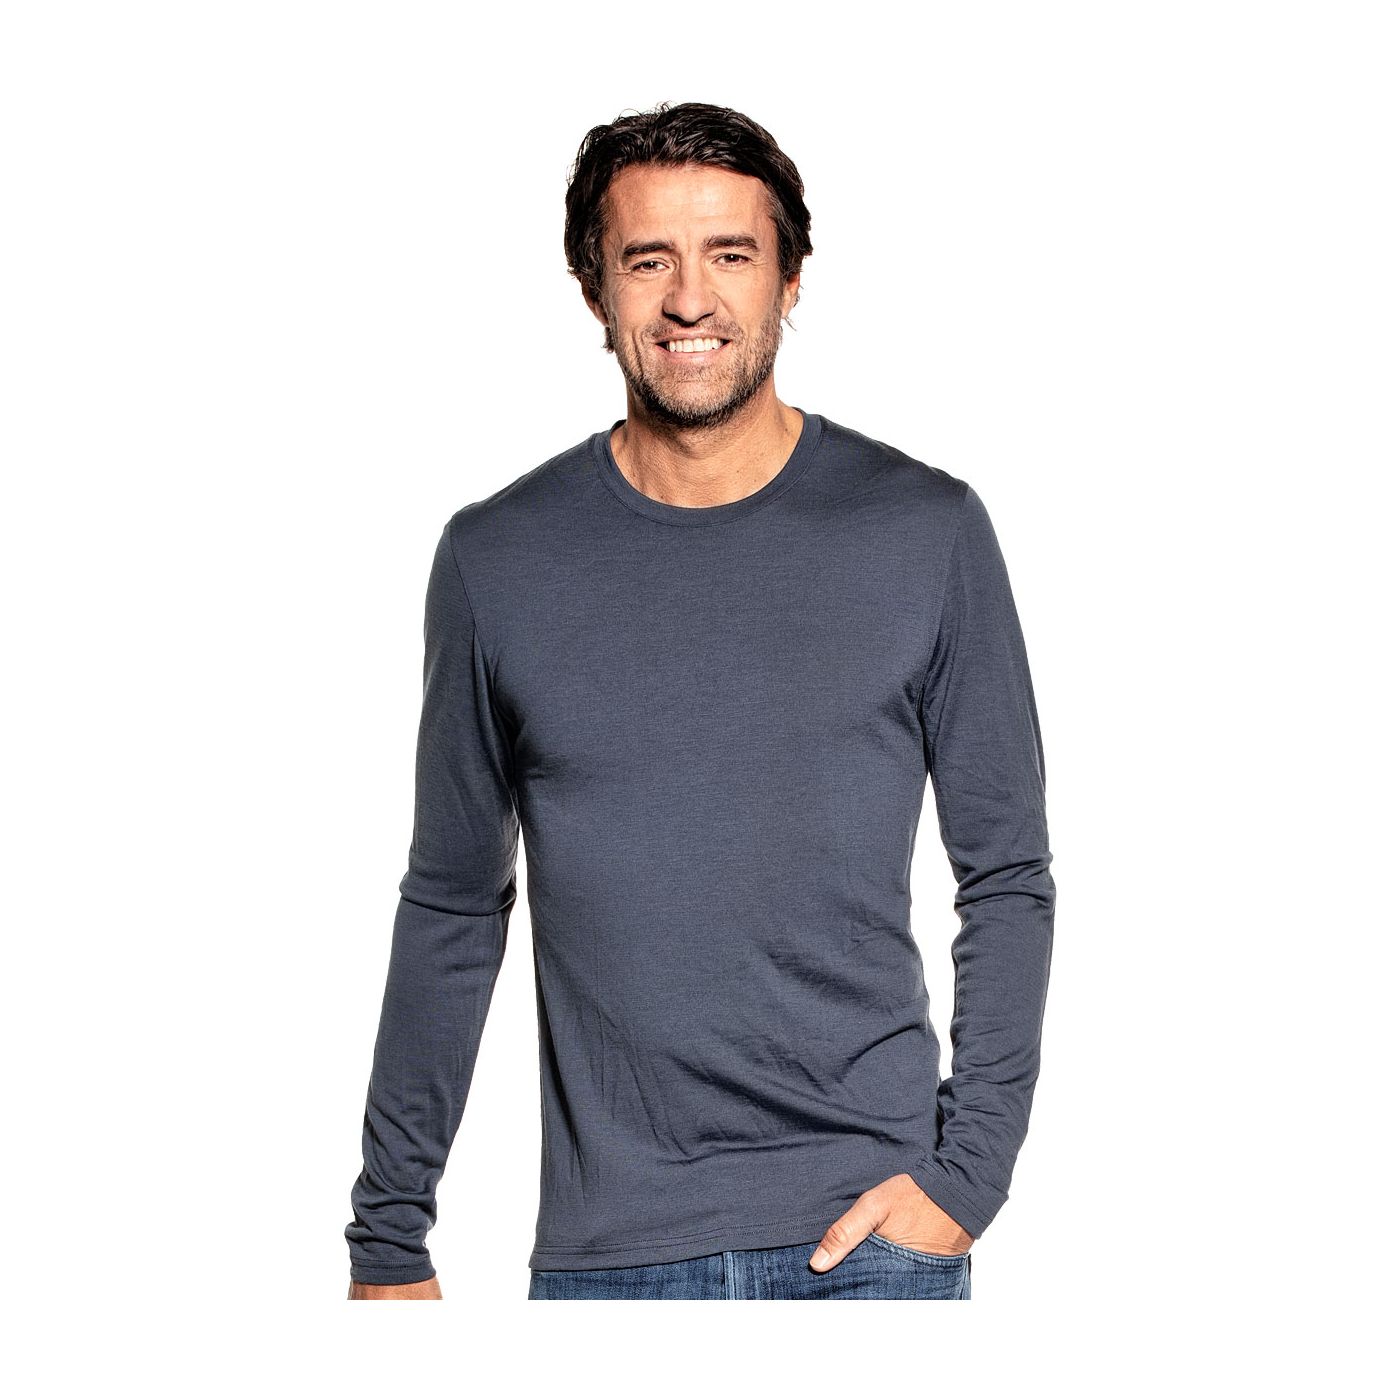 Shirt long sleeve for men made of Merino wool in Grey blue